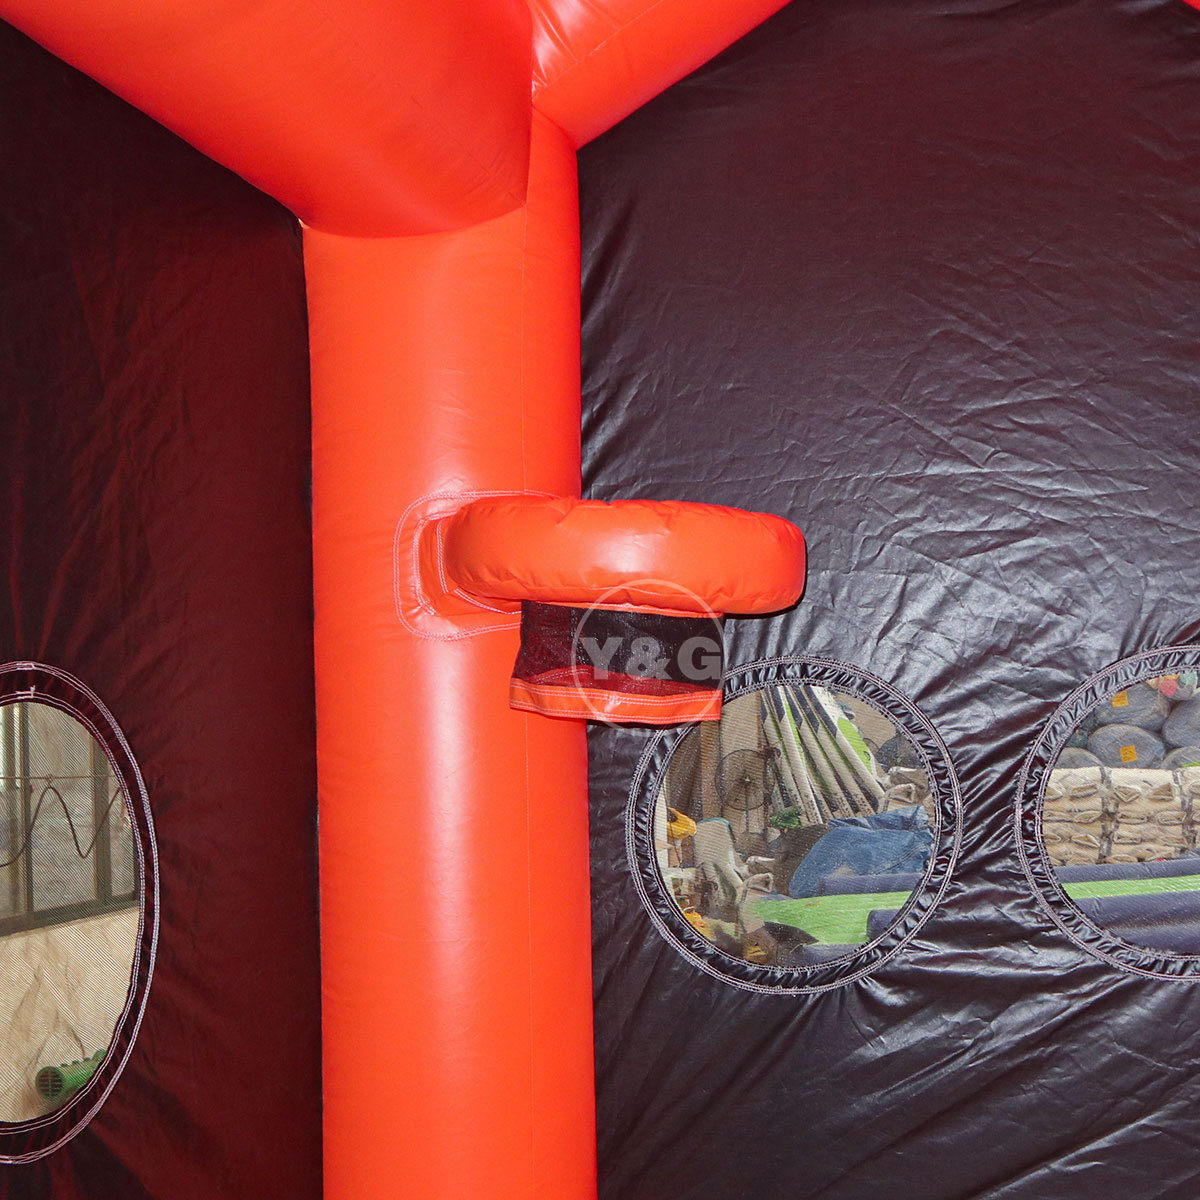 inflatable tiger park bounce houseYG-143